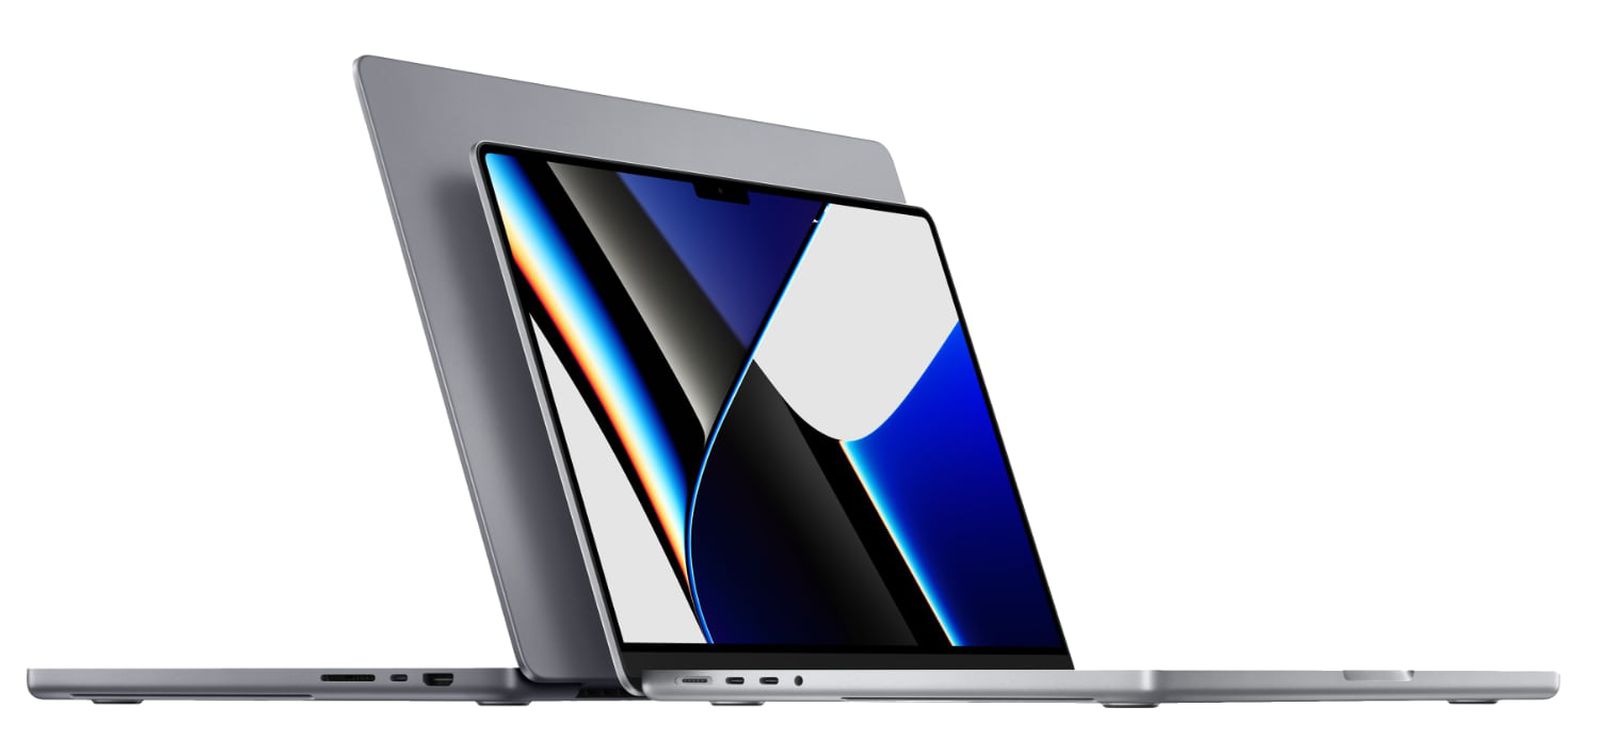 DoJ Arrests Hacker Involved With REvil Group That Stole Apple's MacBook Pro Schematics